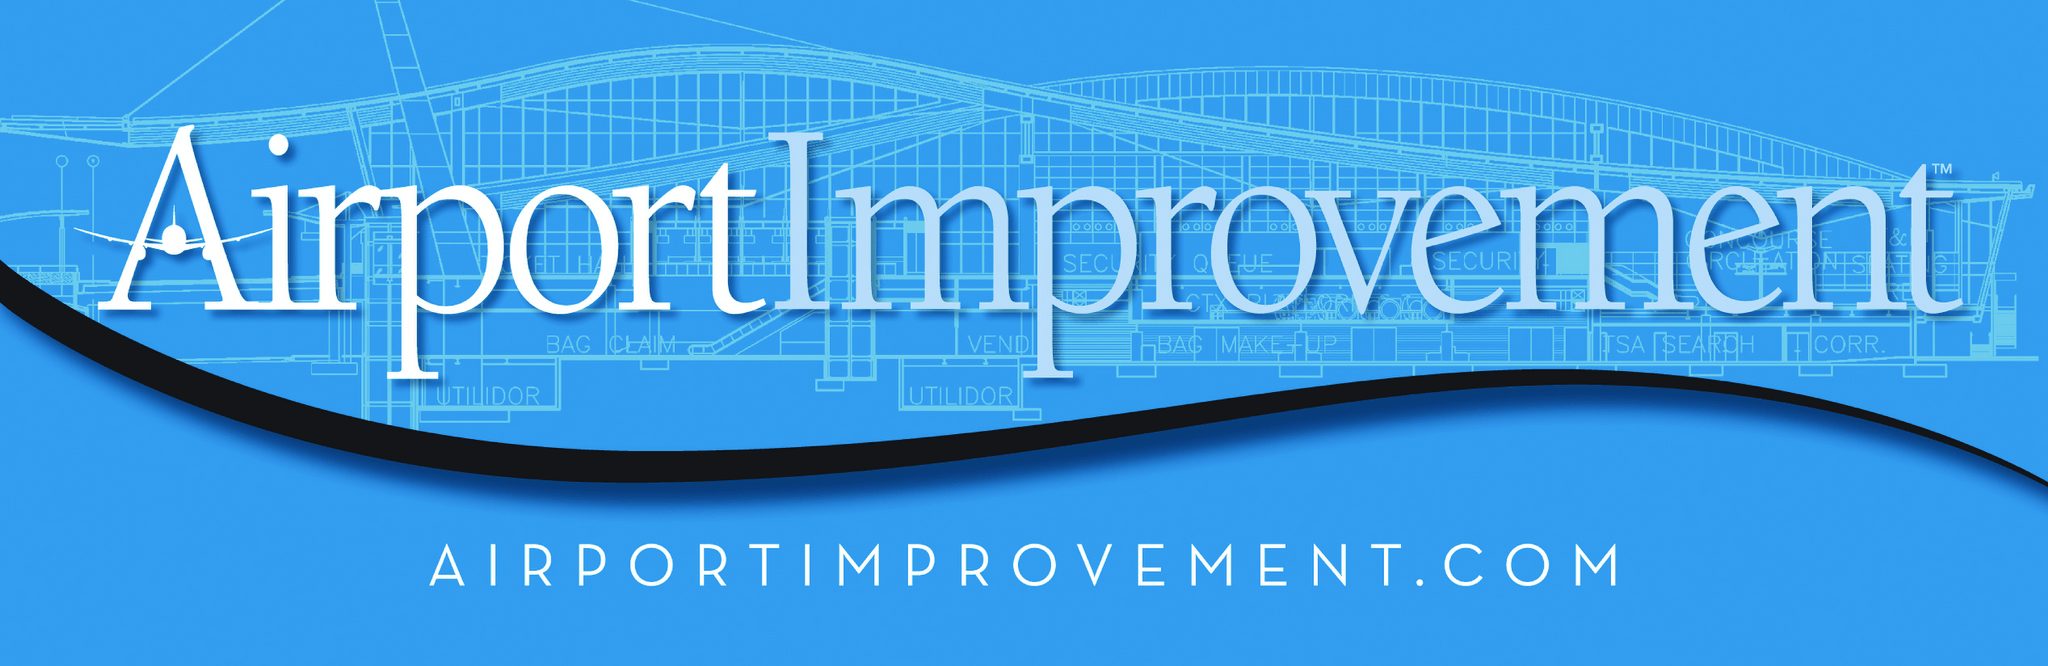 airport_improvement_logo